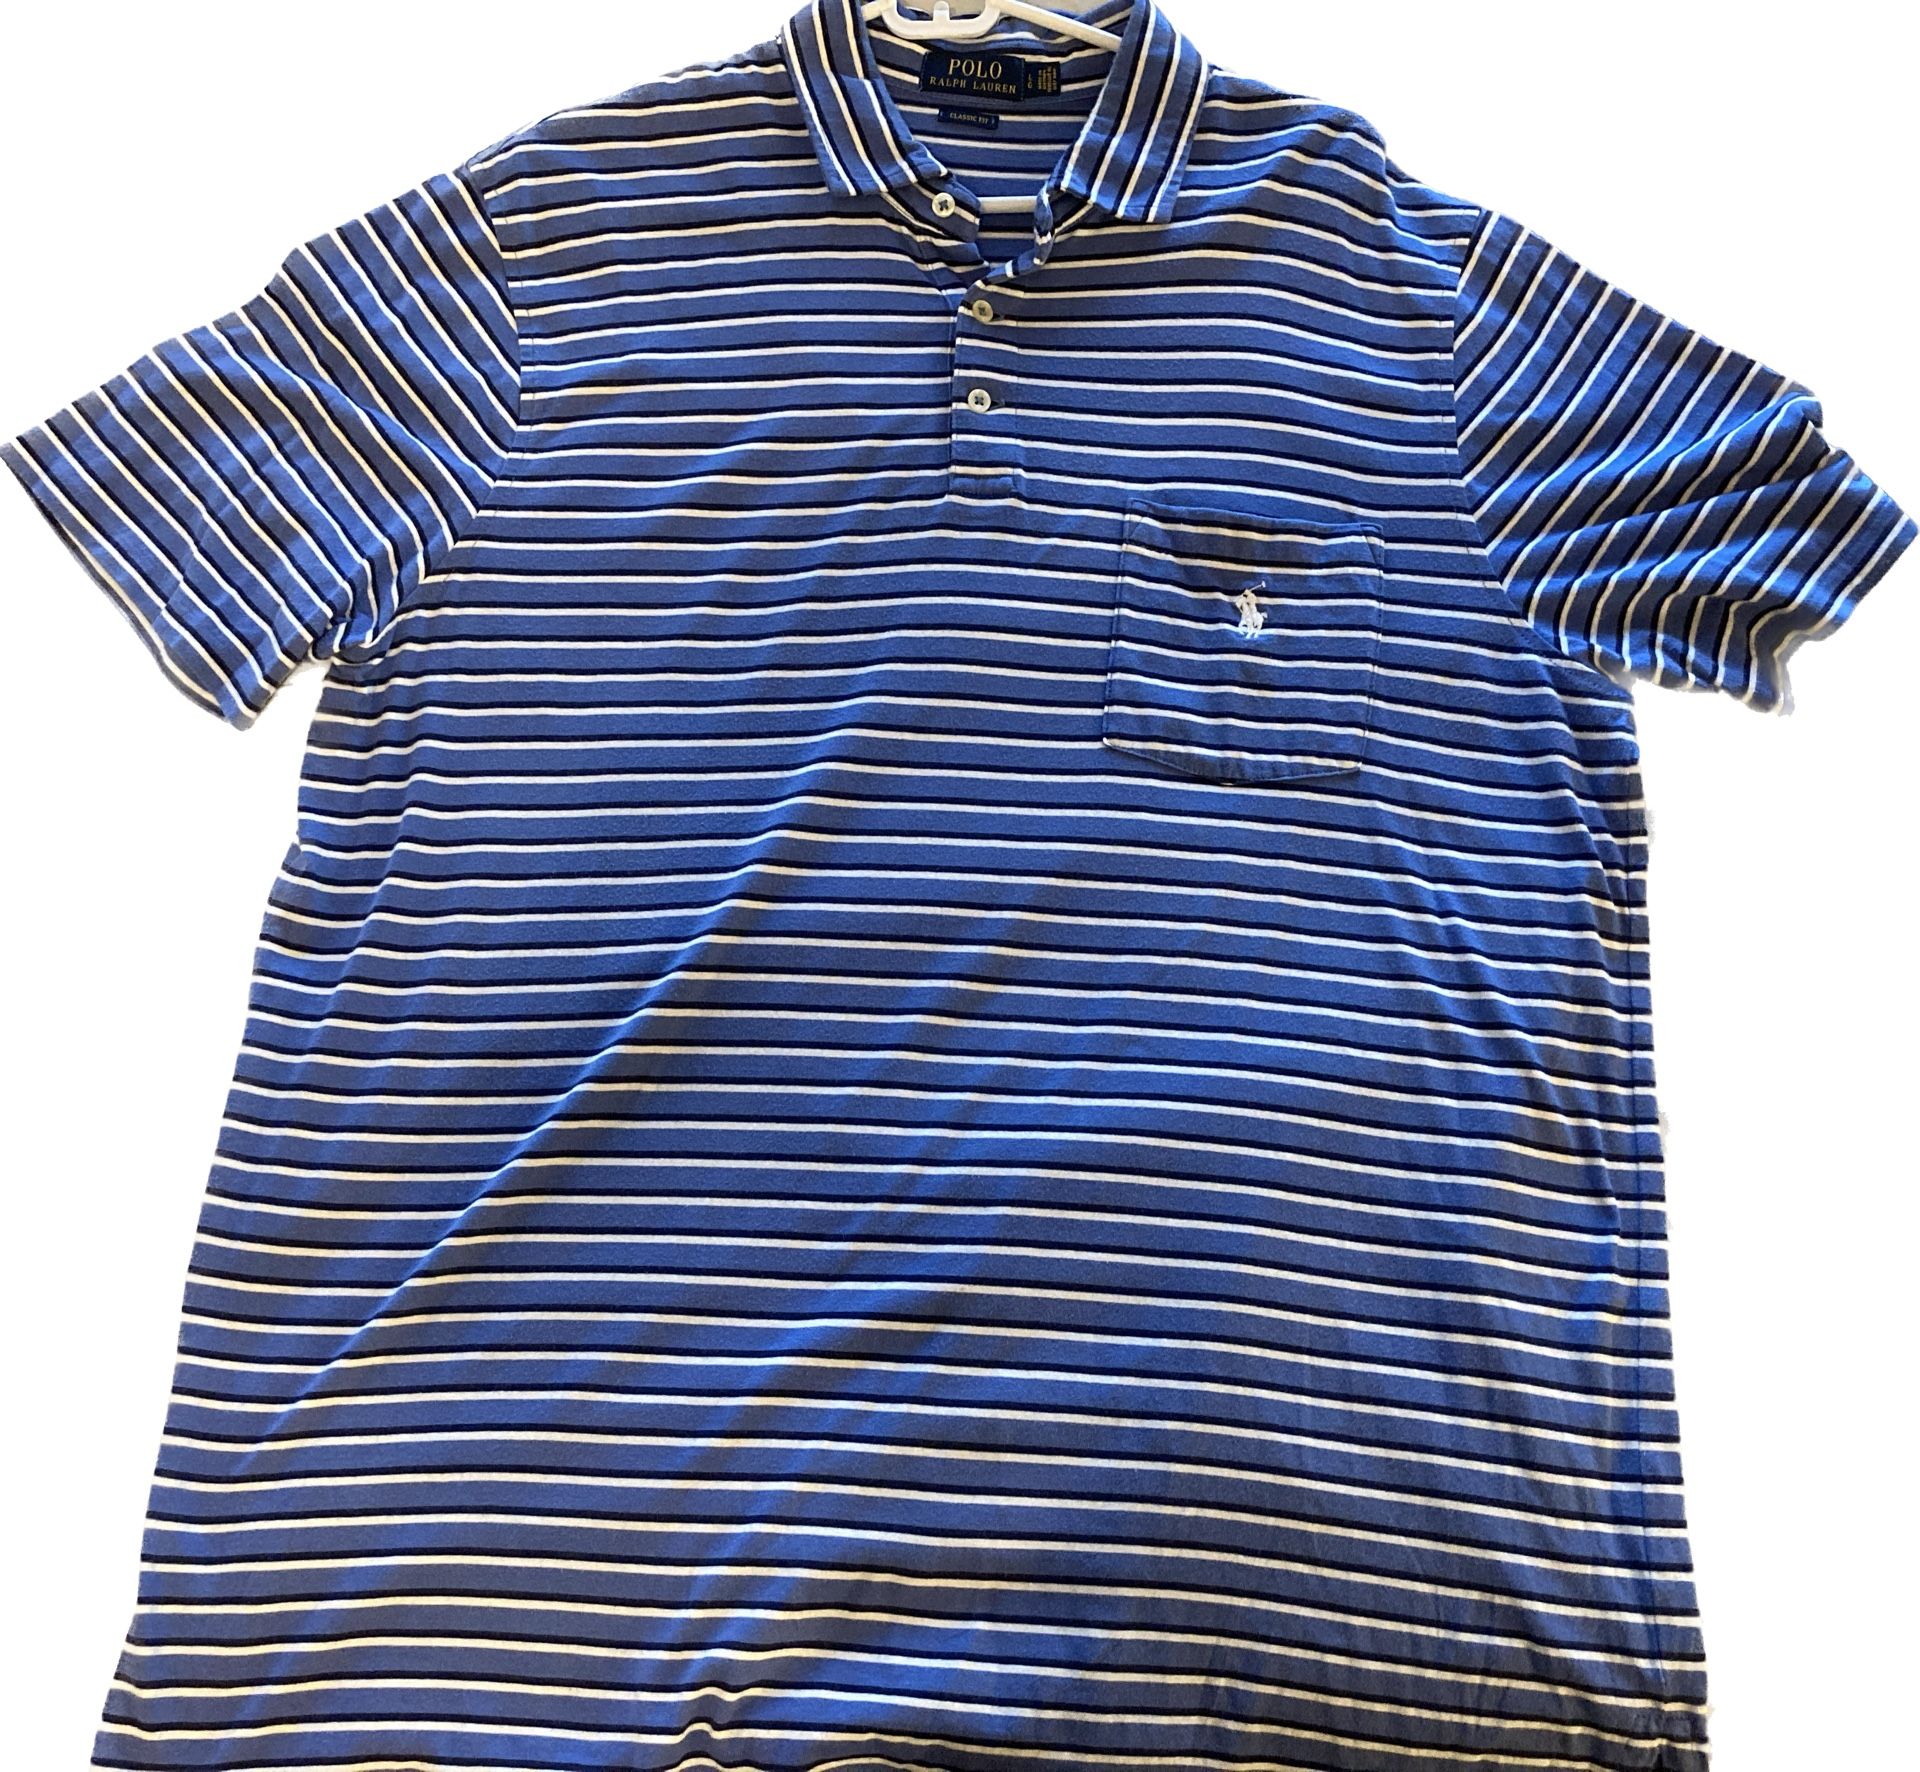 Polo Ralph Lauren Pocket Polo Shirt Mens Large Dark Blue White Striped Casual